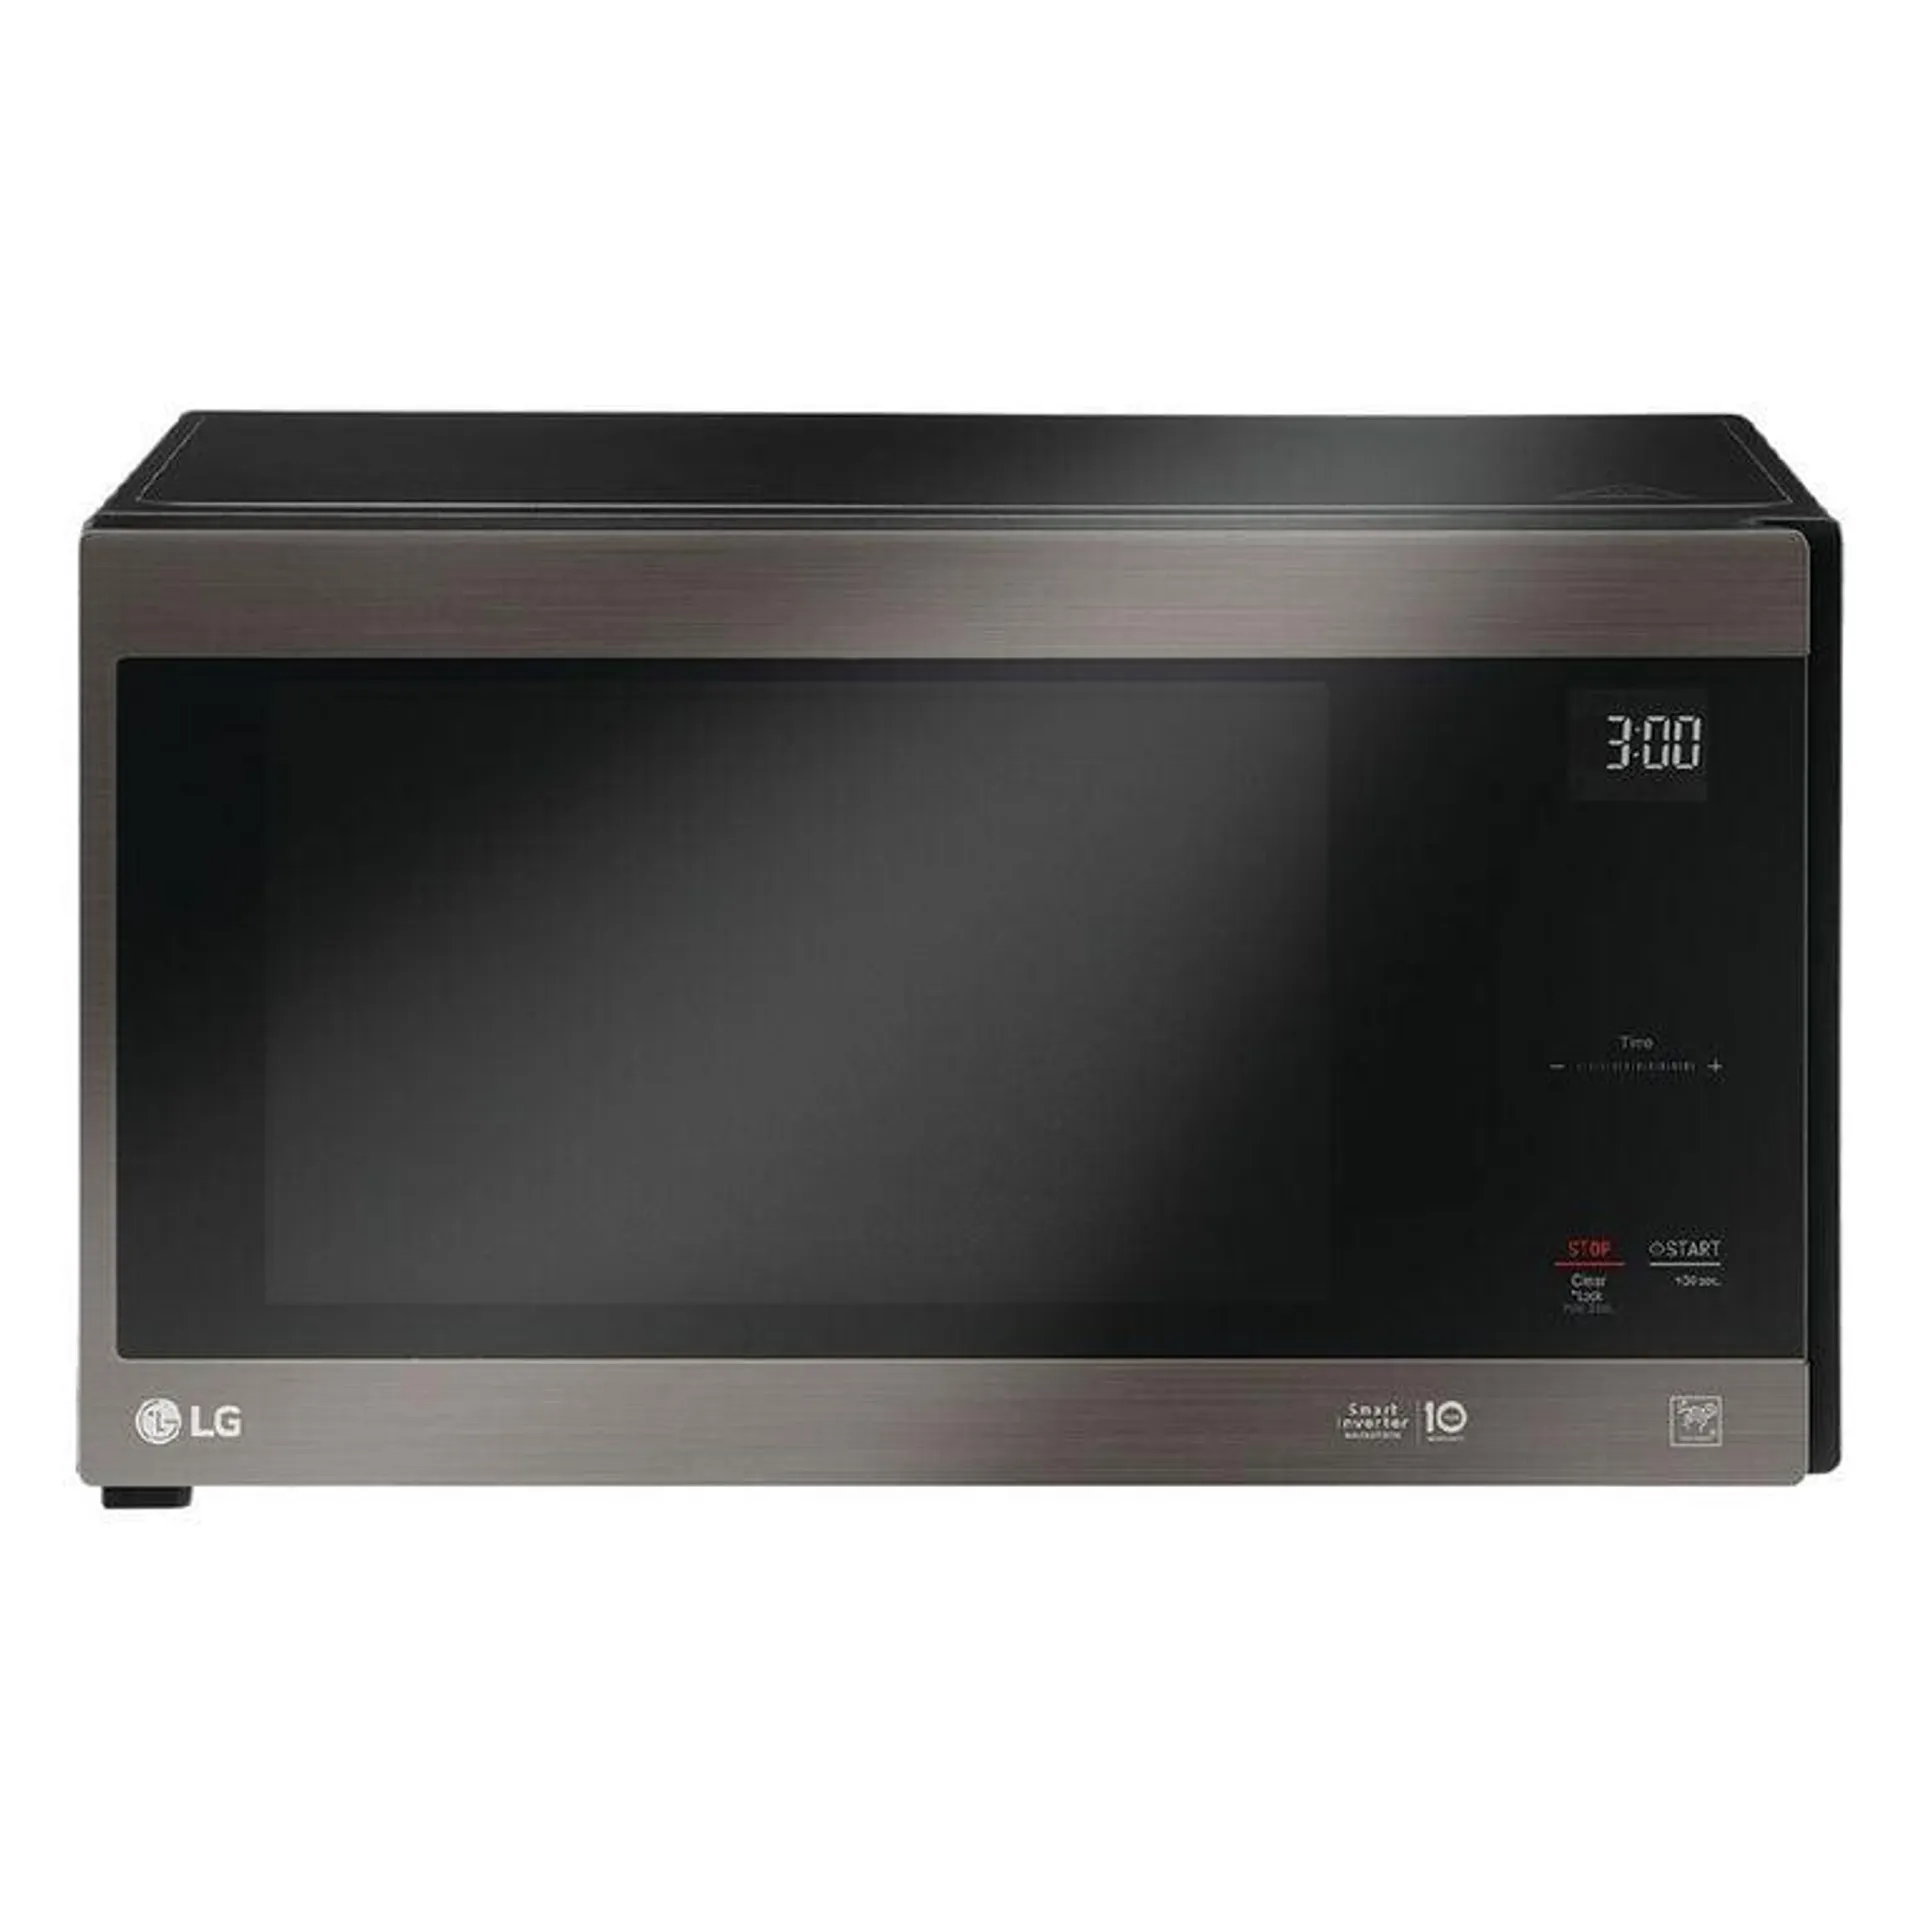 LG 42L NeoChef Smart Inverter Microwave - Black Stainless